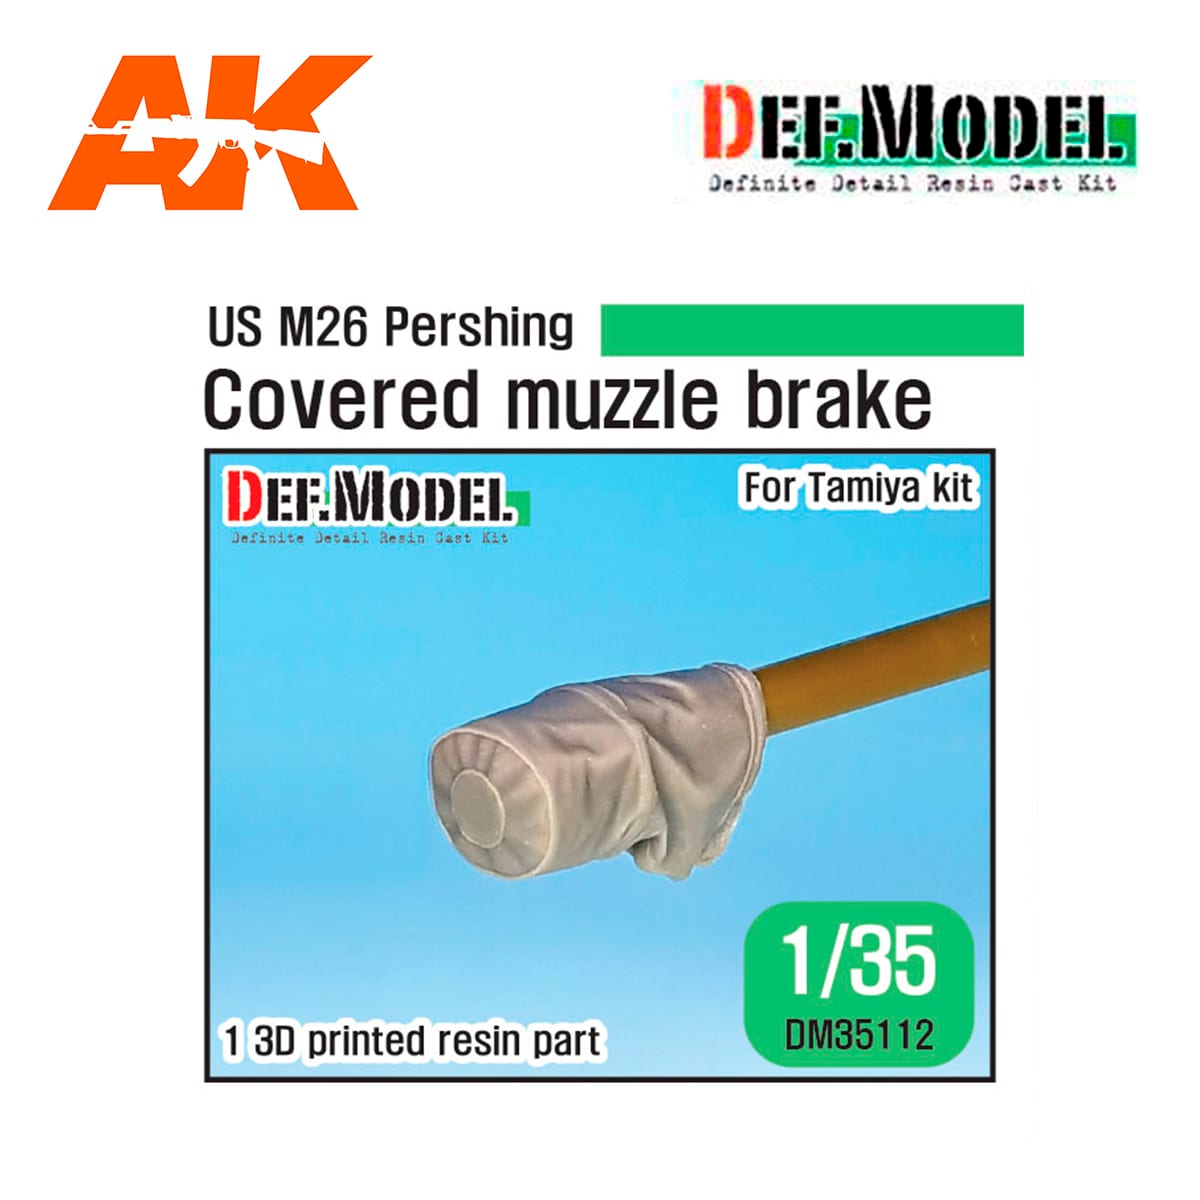 US M26 Pershing Muzzle brake with canvas cover (for Tamiya kit)-3Dprinted part